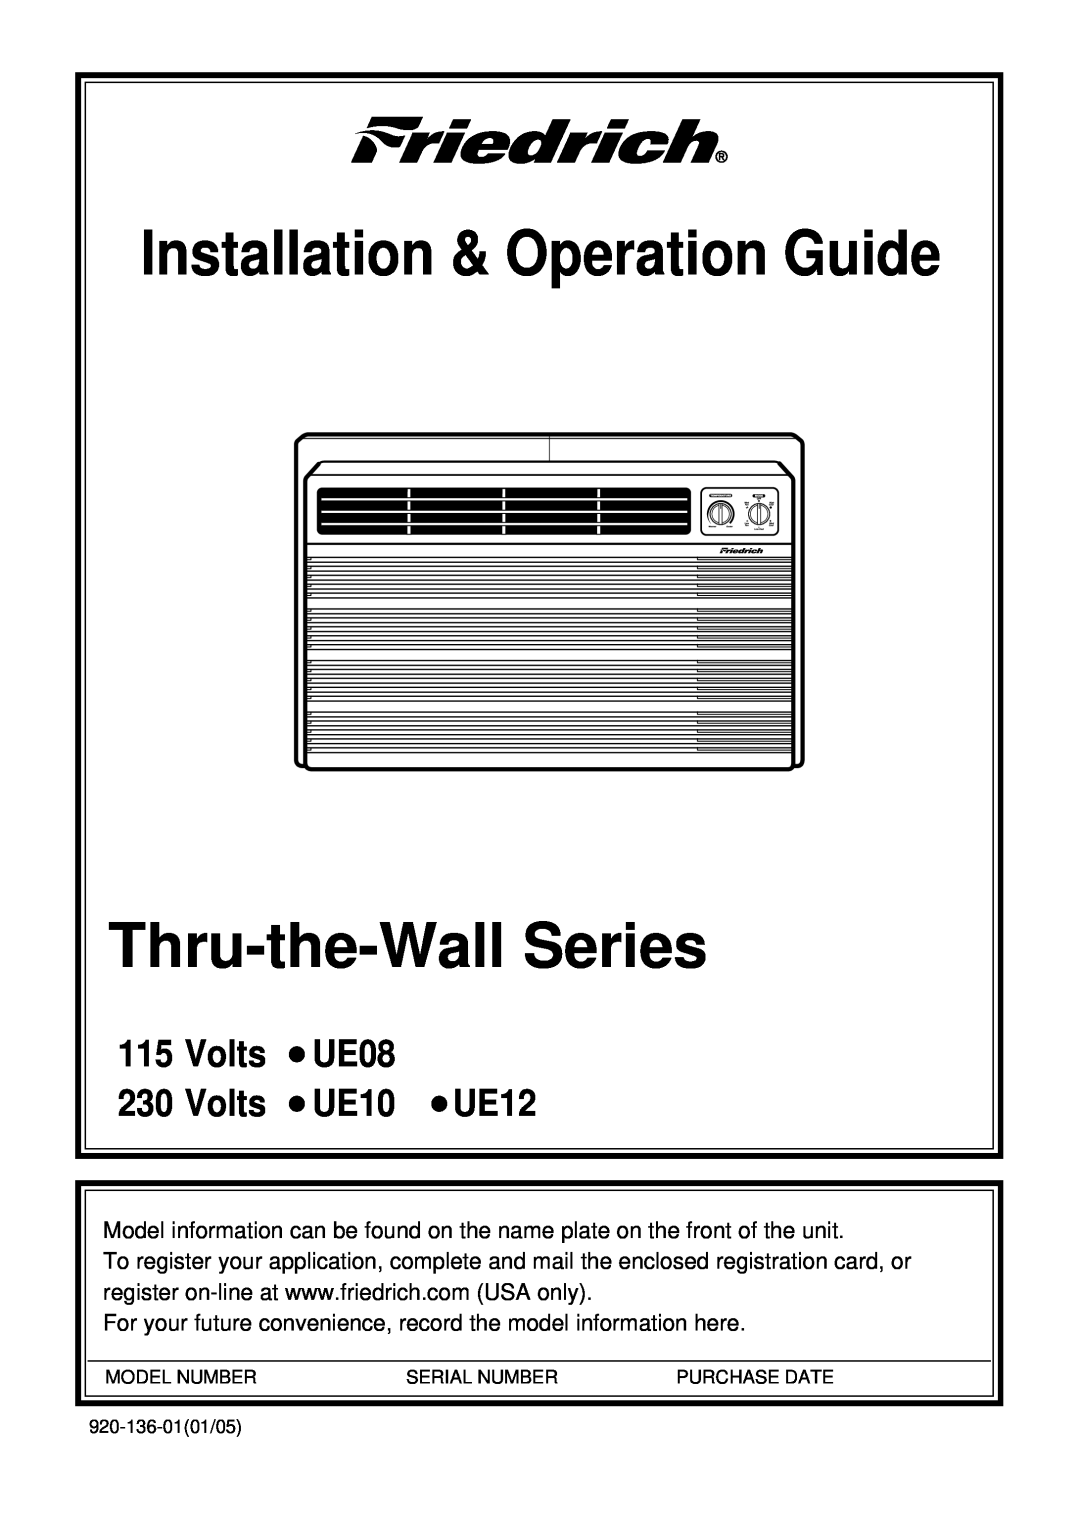 Friedrich manual Installation & Operation Guide Thru-the-Wall Series, Volts UE08 230 Volts UE10 UE12 